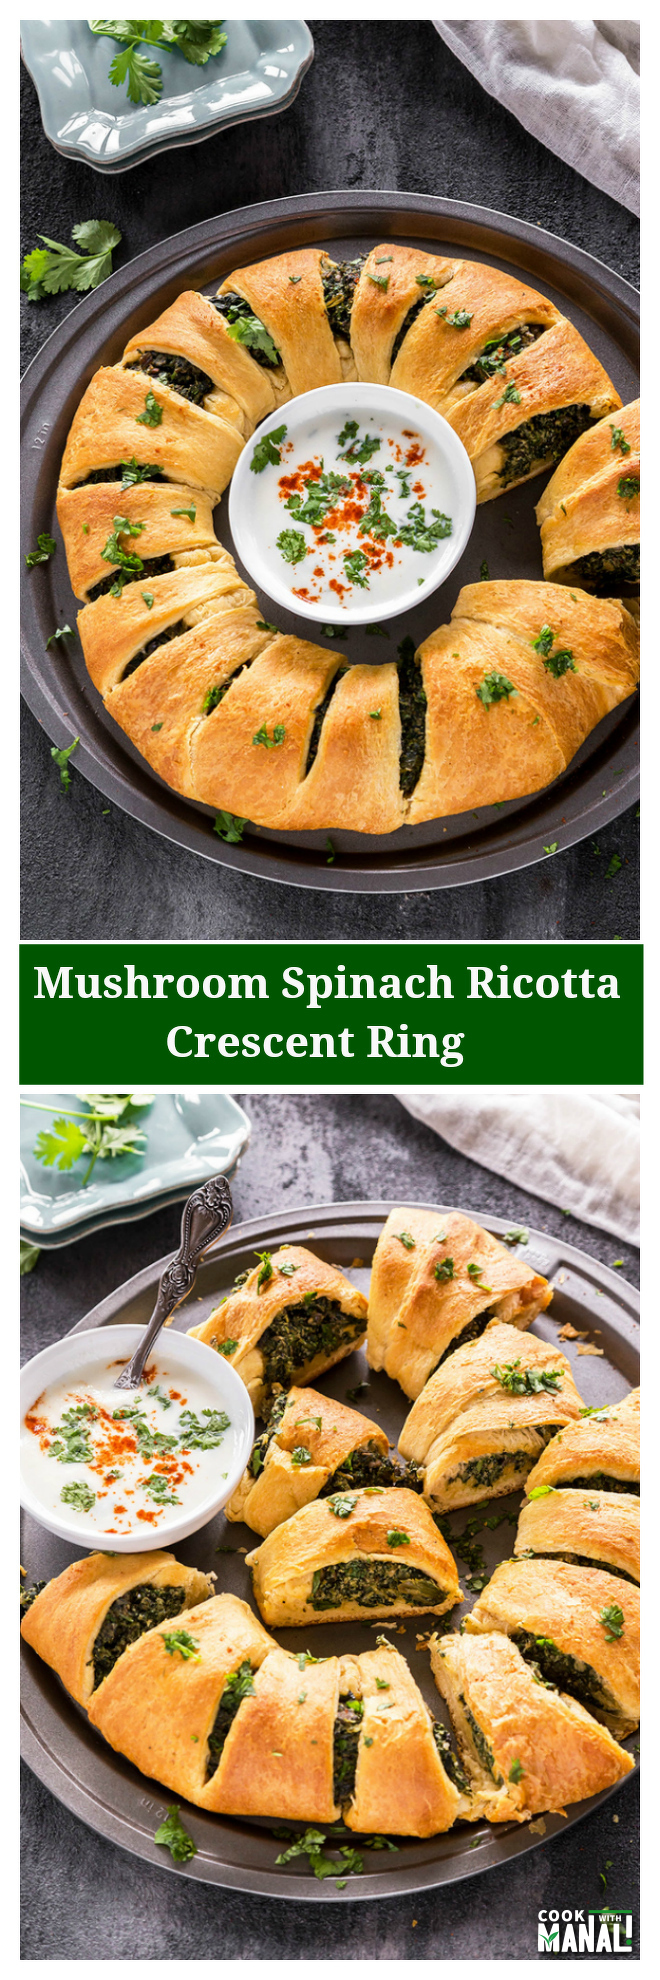 mushroom-spinach-ricotta-crescent-ring-collage